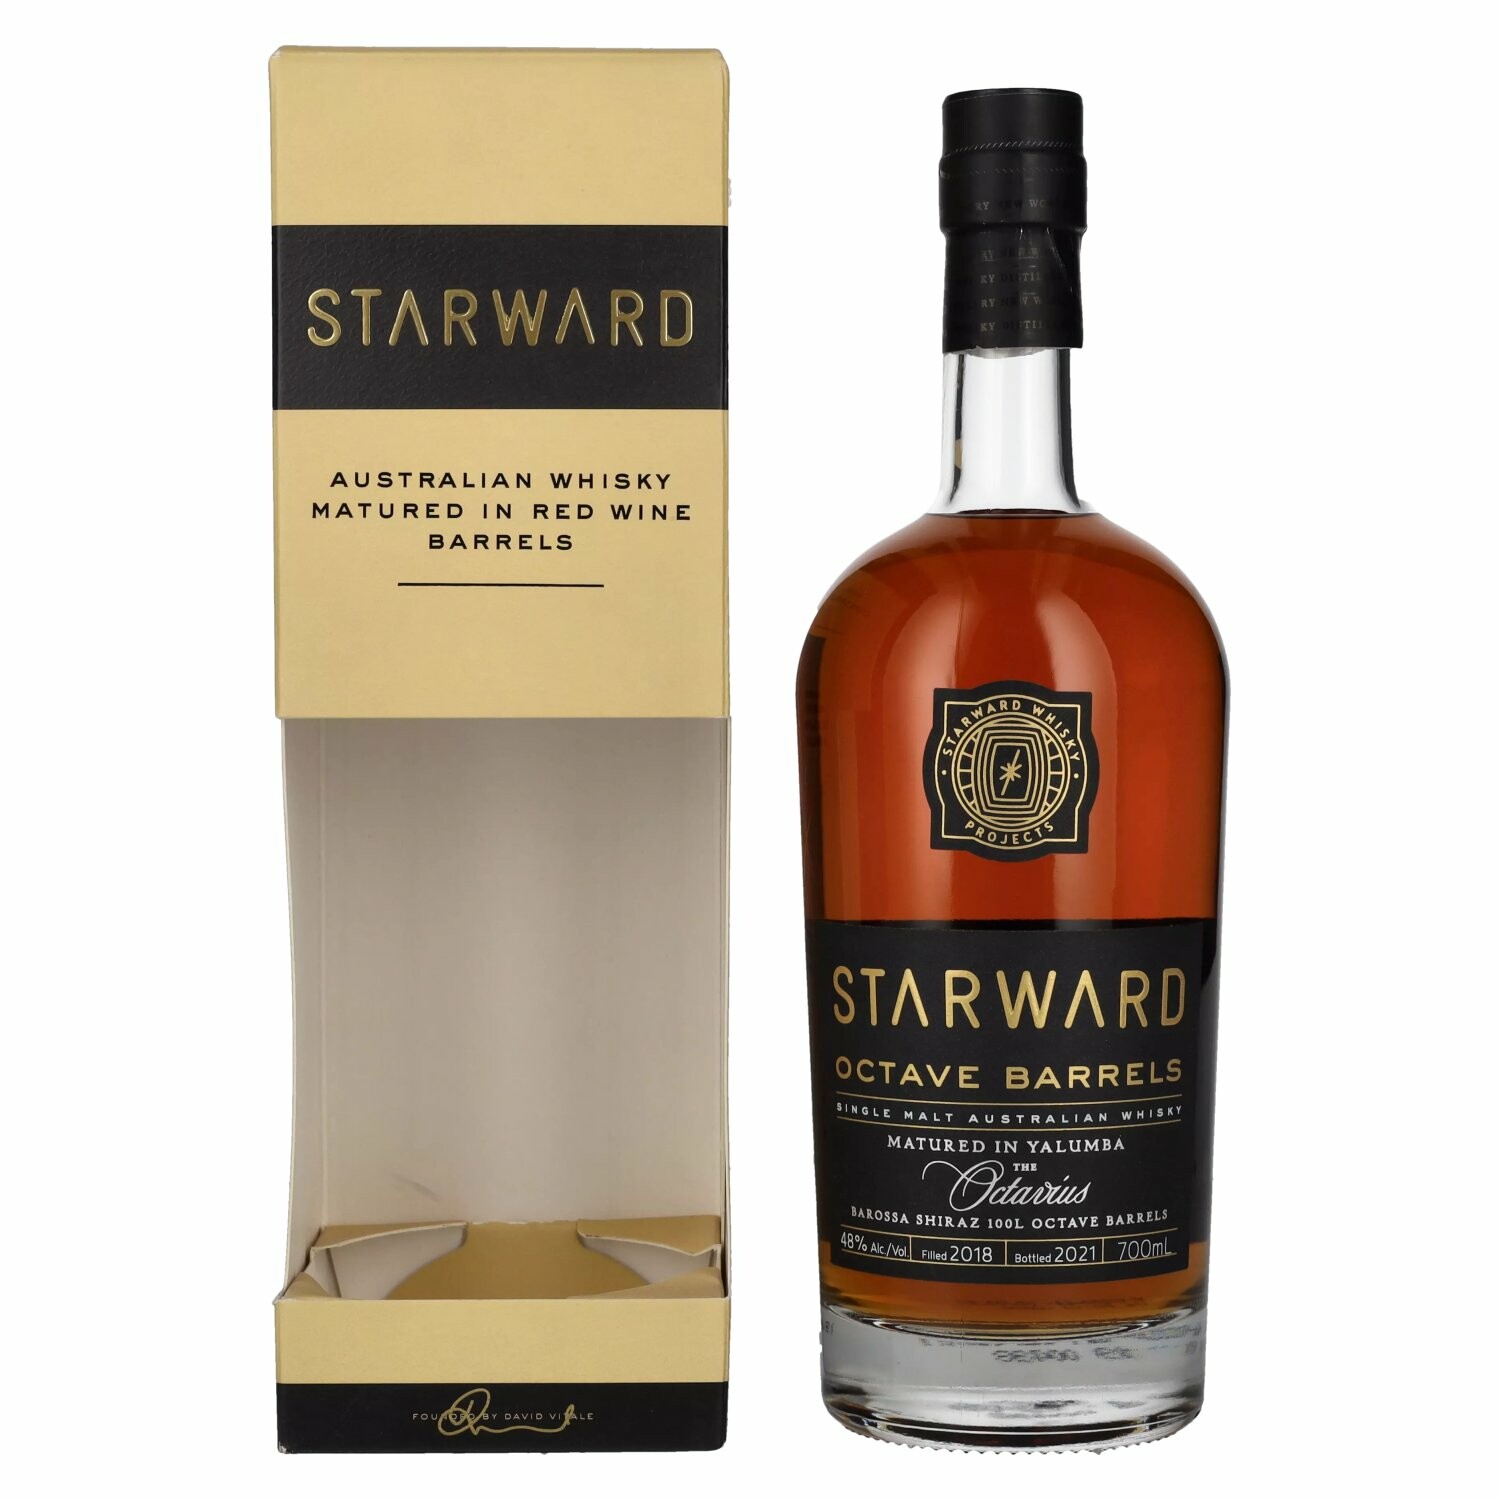 Starward OCTAVE BARRELS Single Malt Australian Whisky 2018 48% Vol. 0,7l in Giftbox